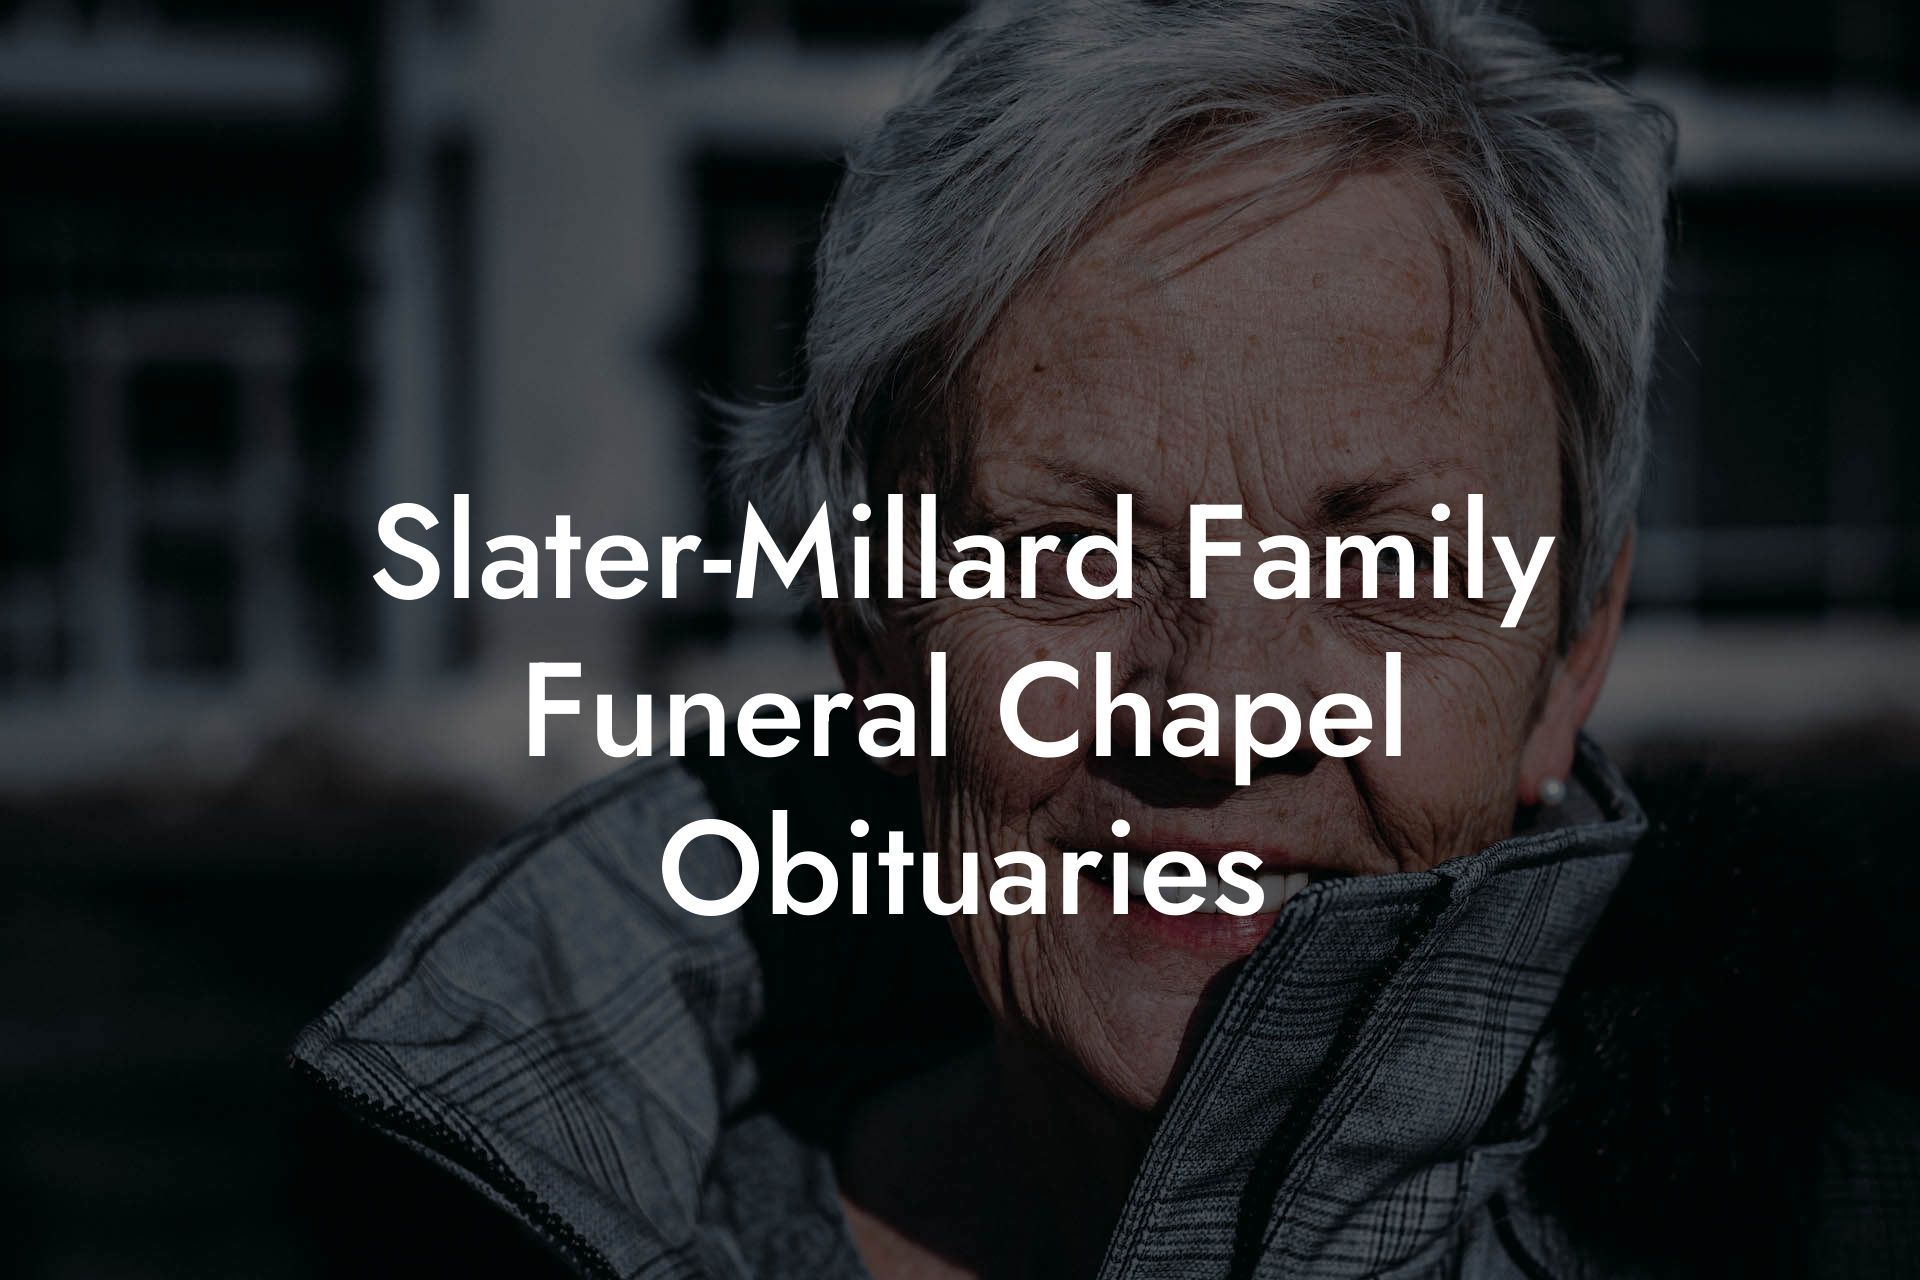 Slater-Millard Family Funeral Chapel Obituaries